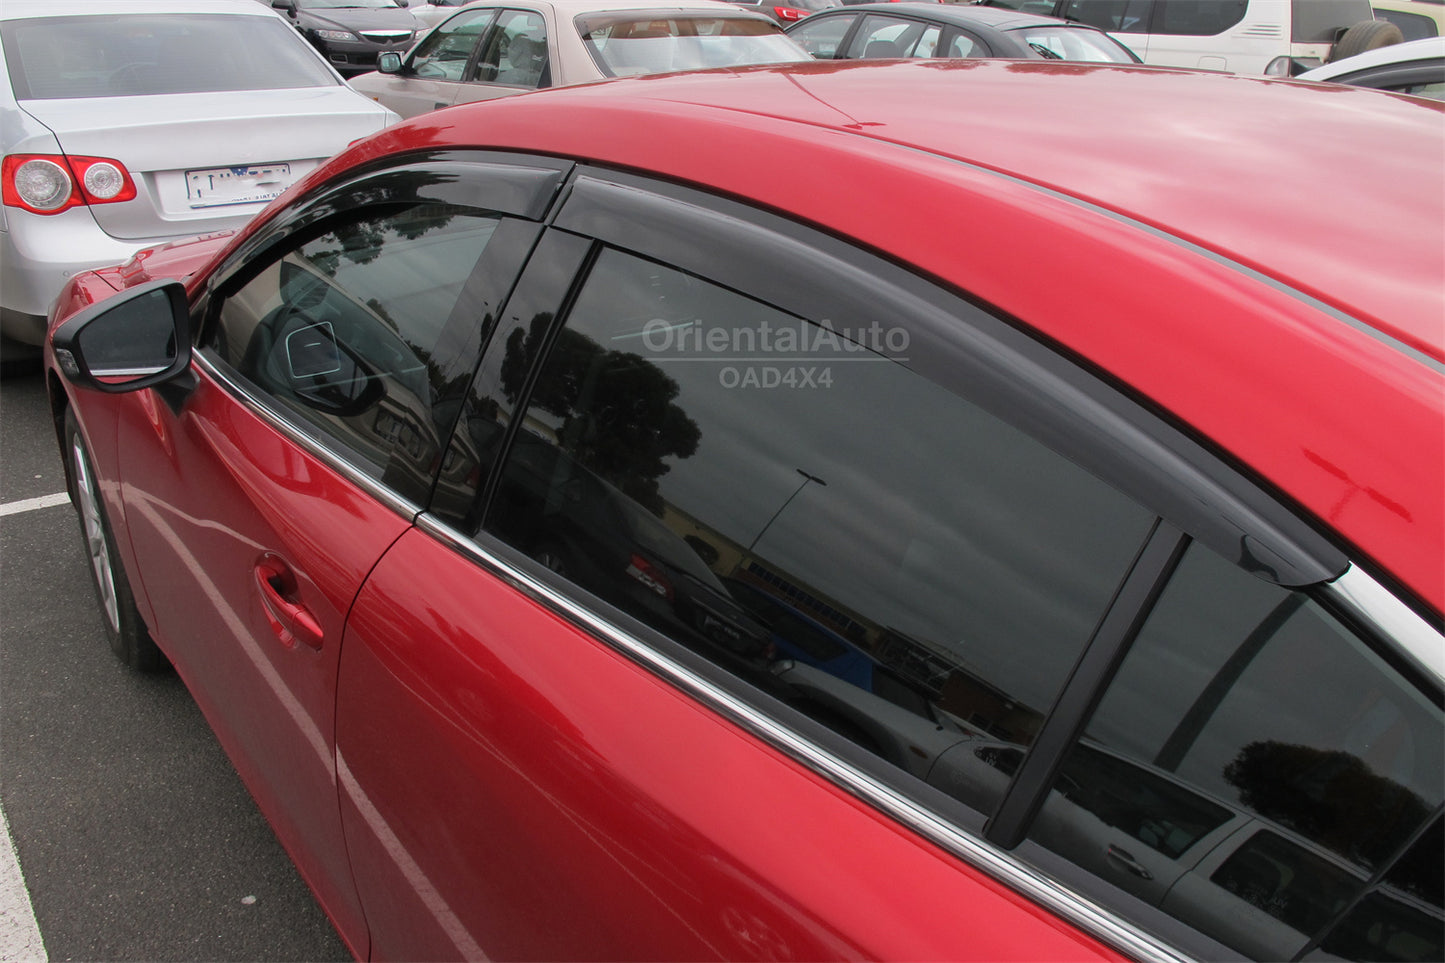 Premium Weathershields For Mazda 6 GJ Sedan 2012+ Weather Shields Window Visor